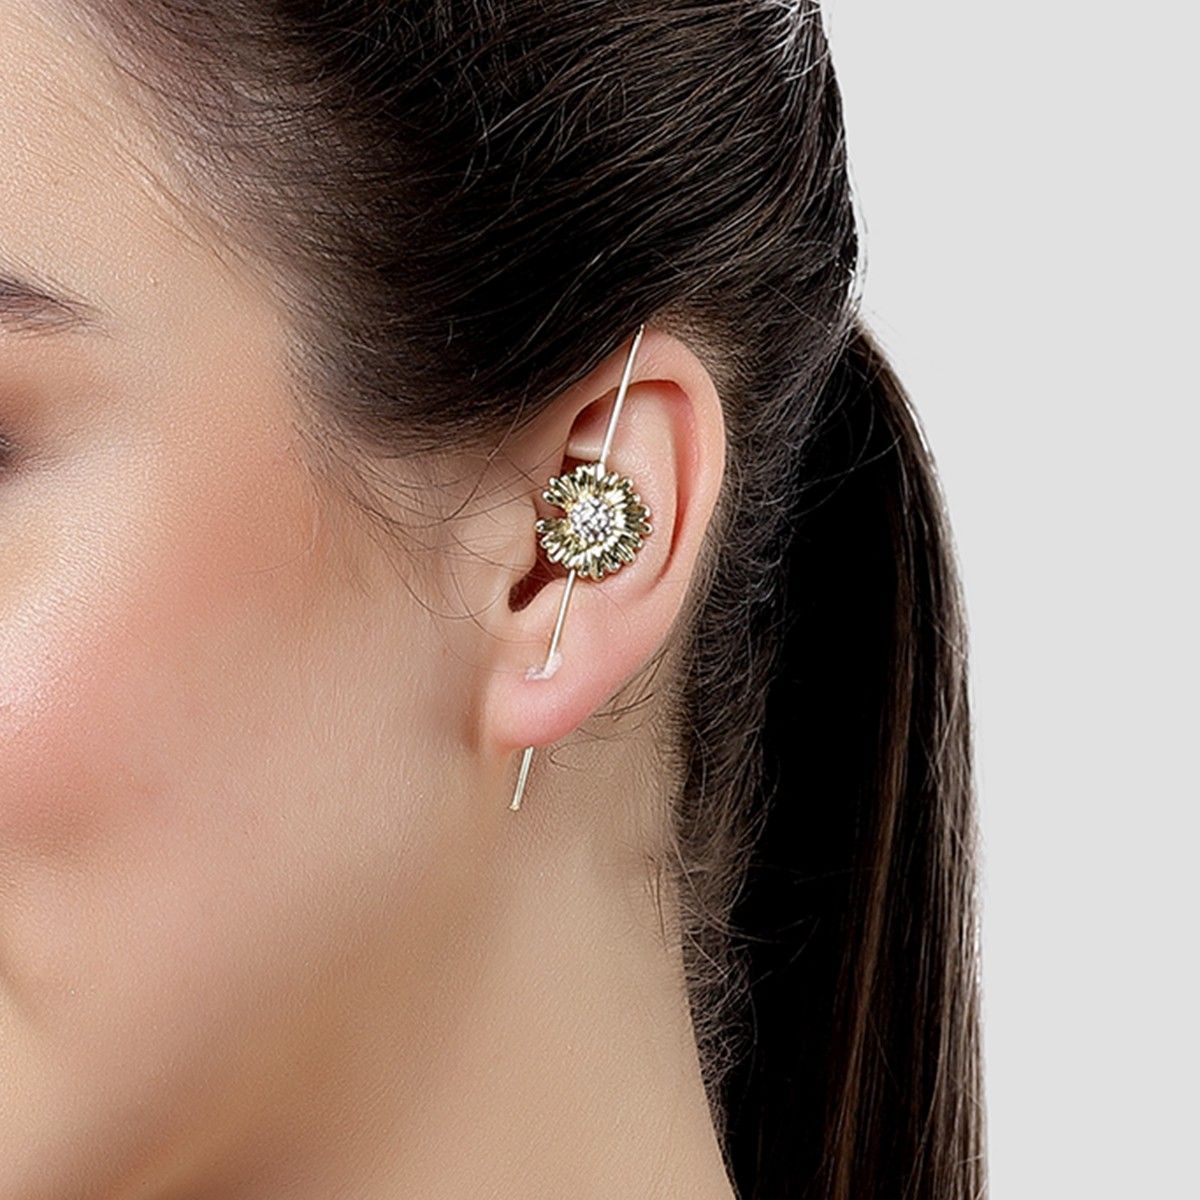 Buy Designer Ear Cuffs for Women